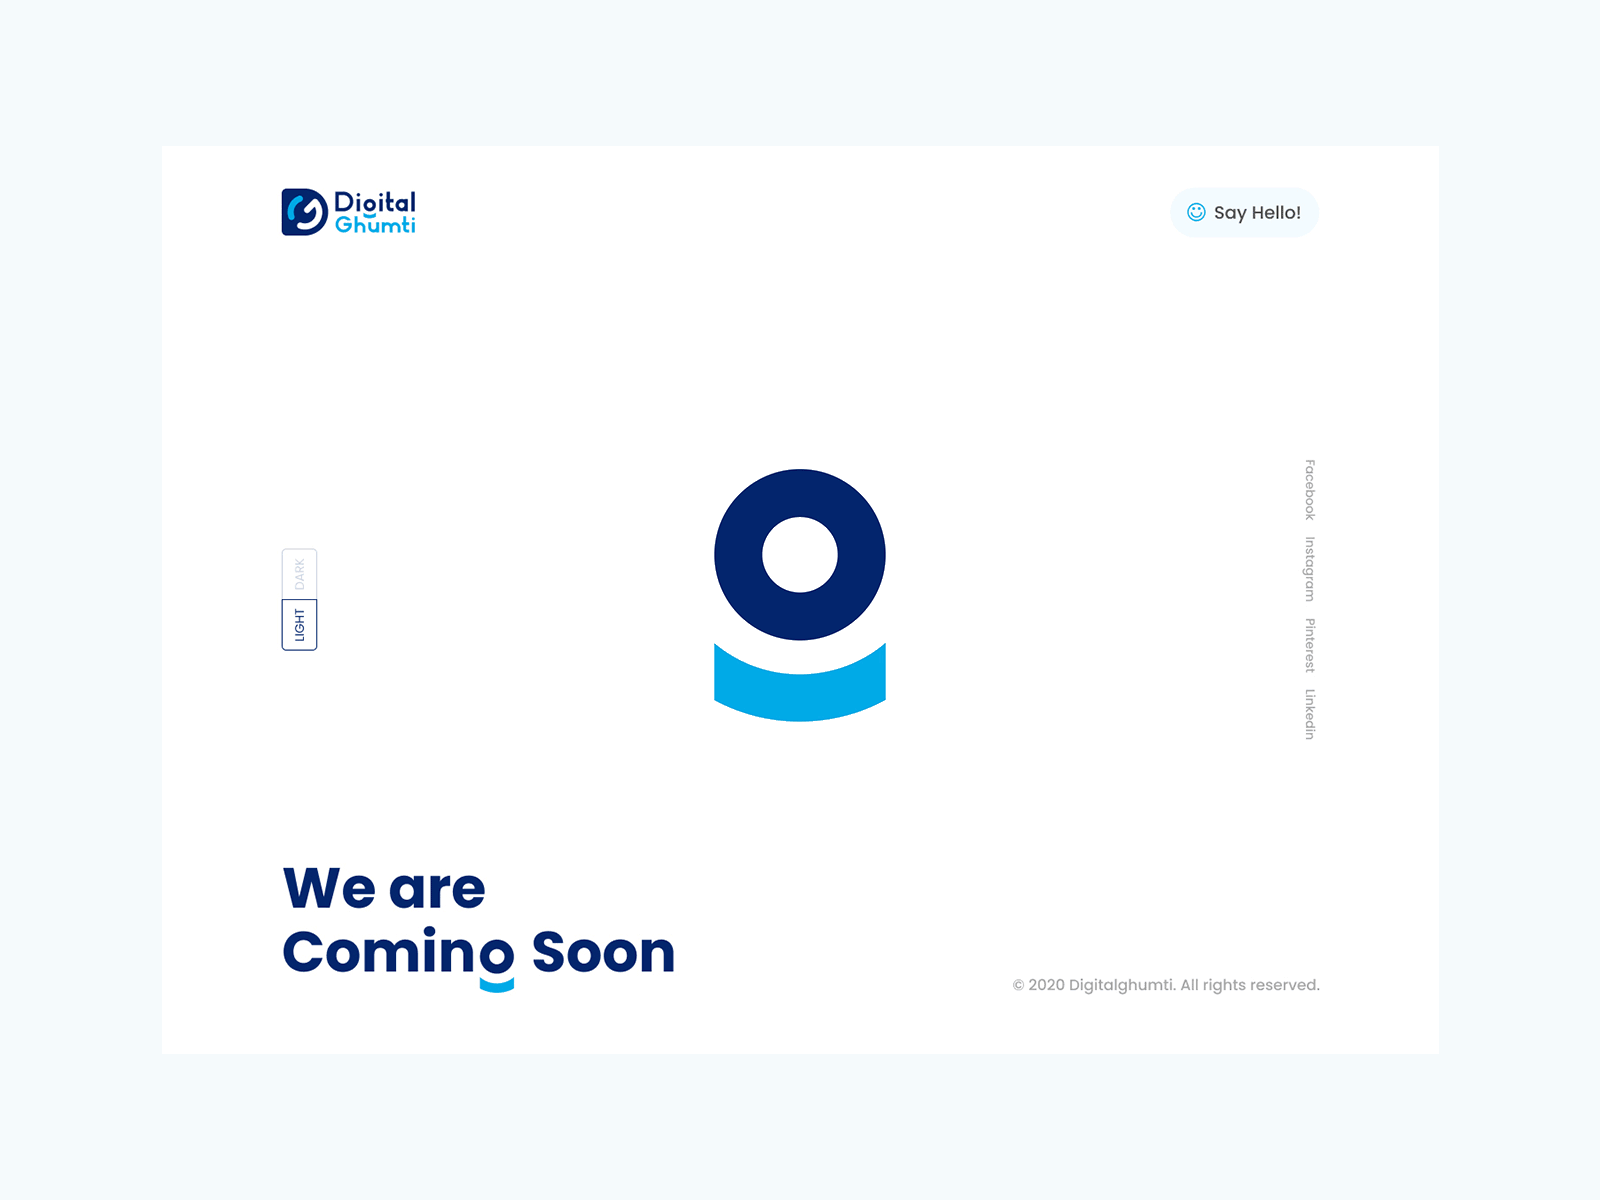 Digital Ghumti - We are coming soon